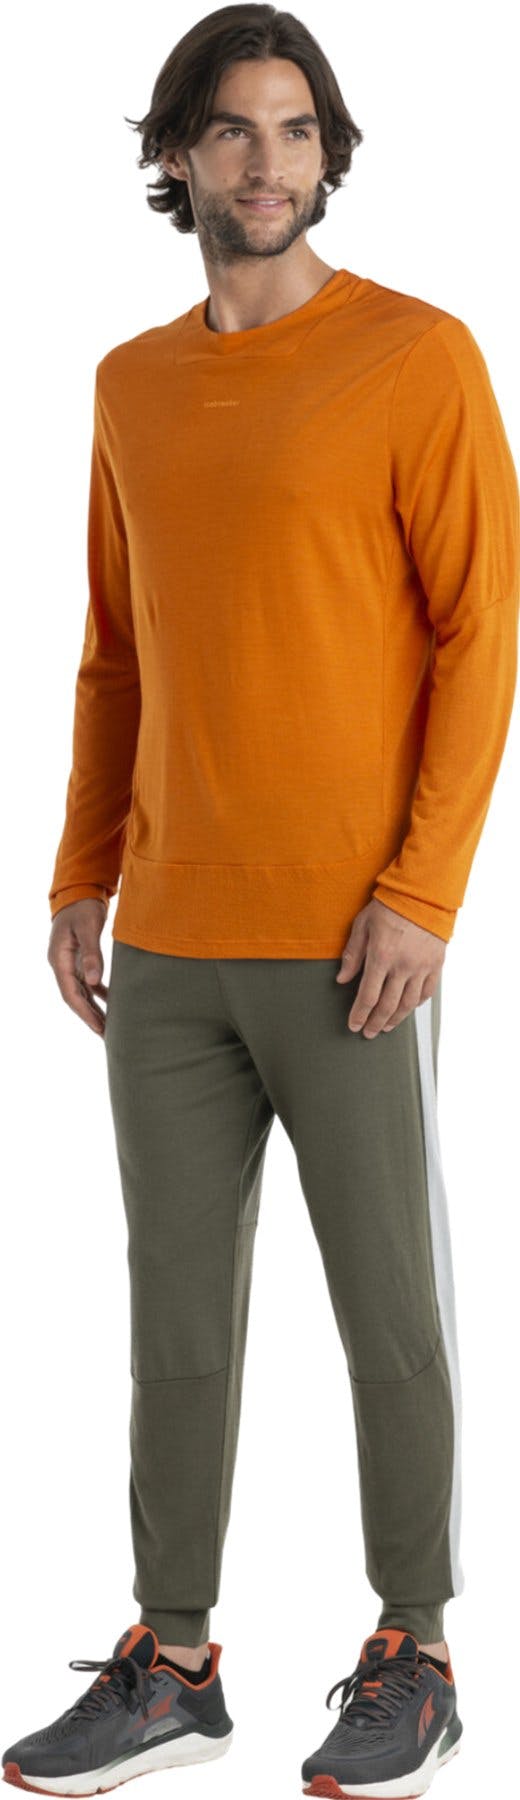 Product image for ZoneKnit Merino Long Sleeve T-Shirt - Men's